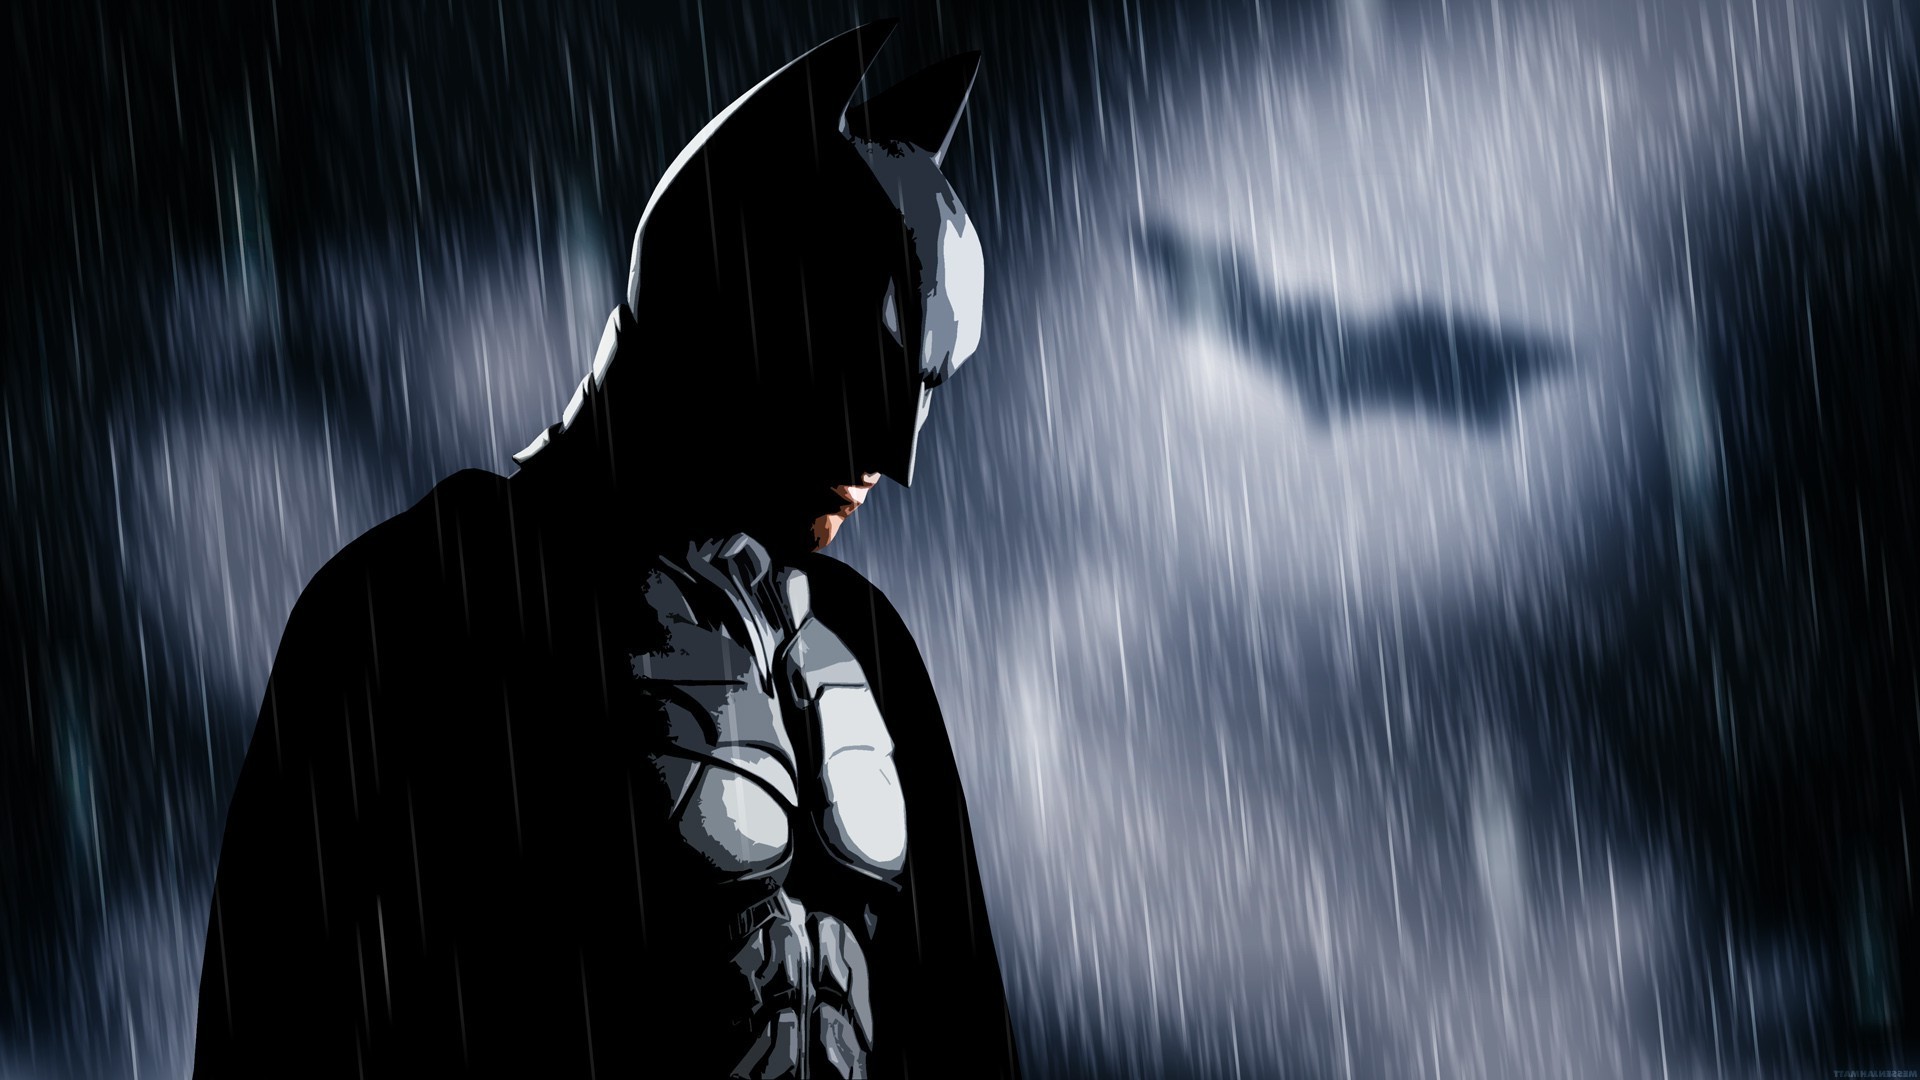 Batman, Bat Signal, Rain, MessenjahMatt, People Wallpapers HD / Desktop and Mobile Backgrounds